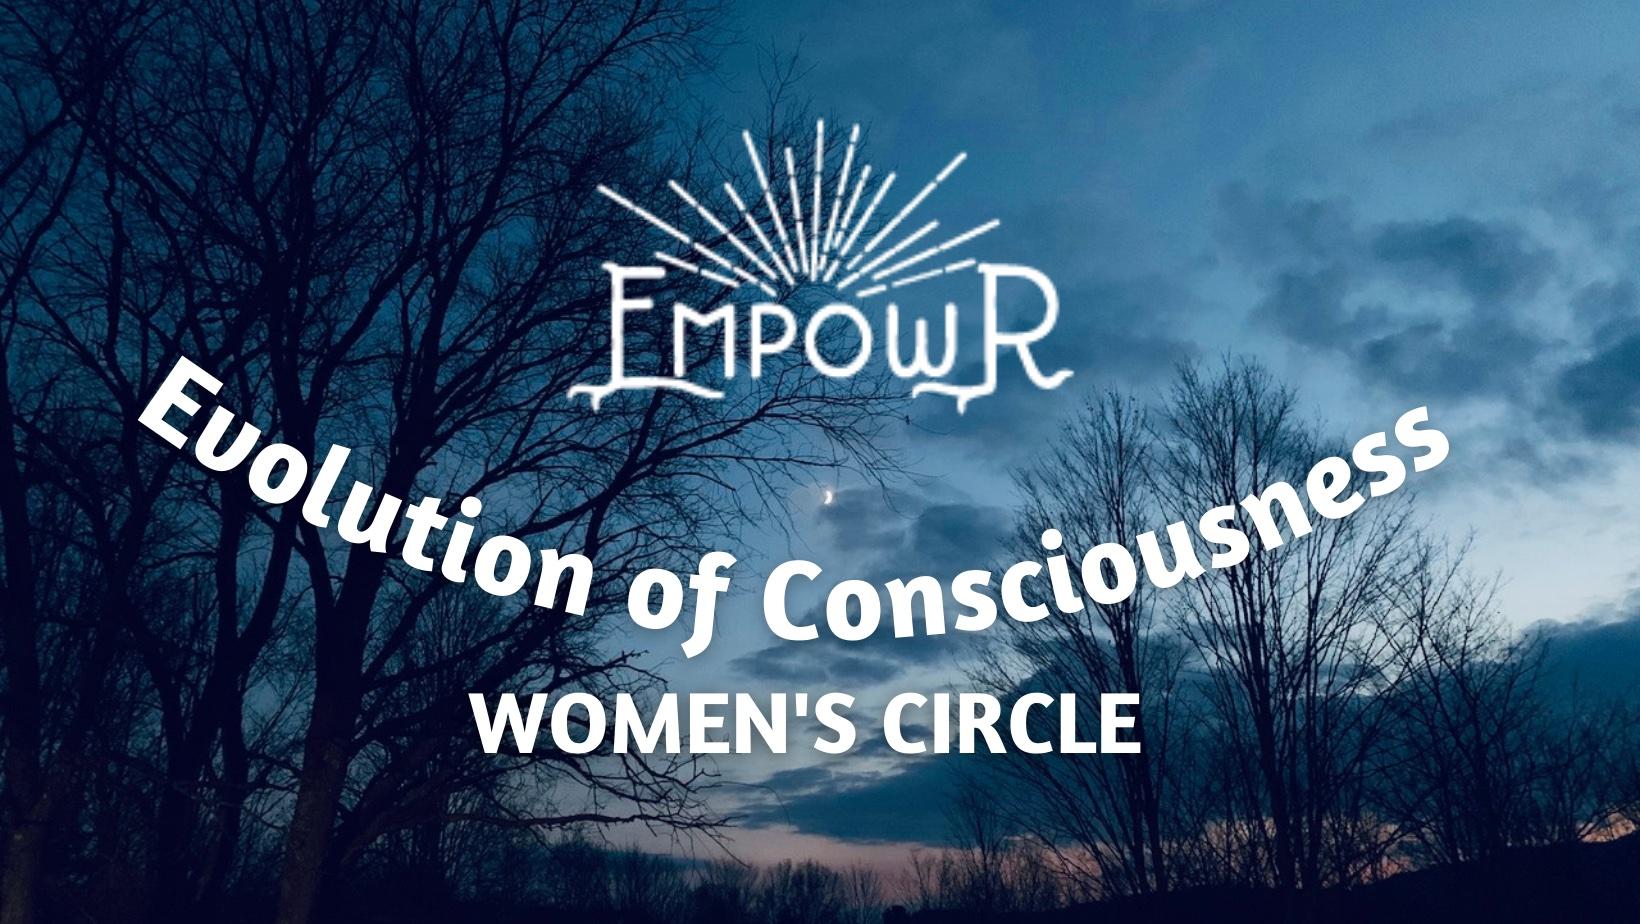 Evolution of Consciousness Women's Circle